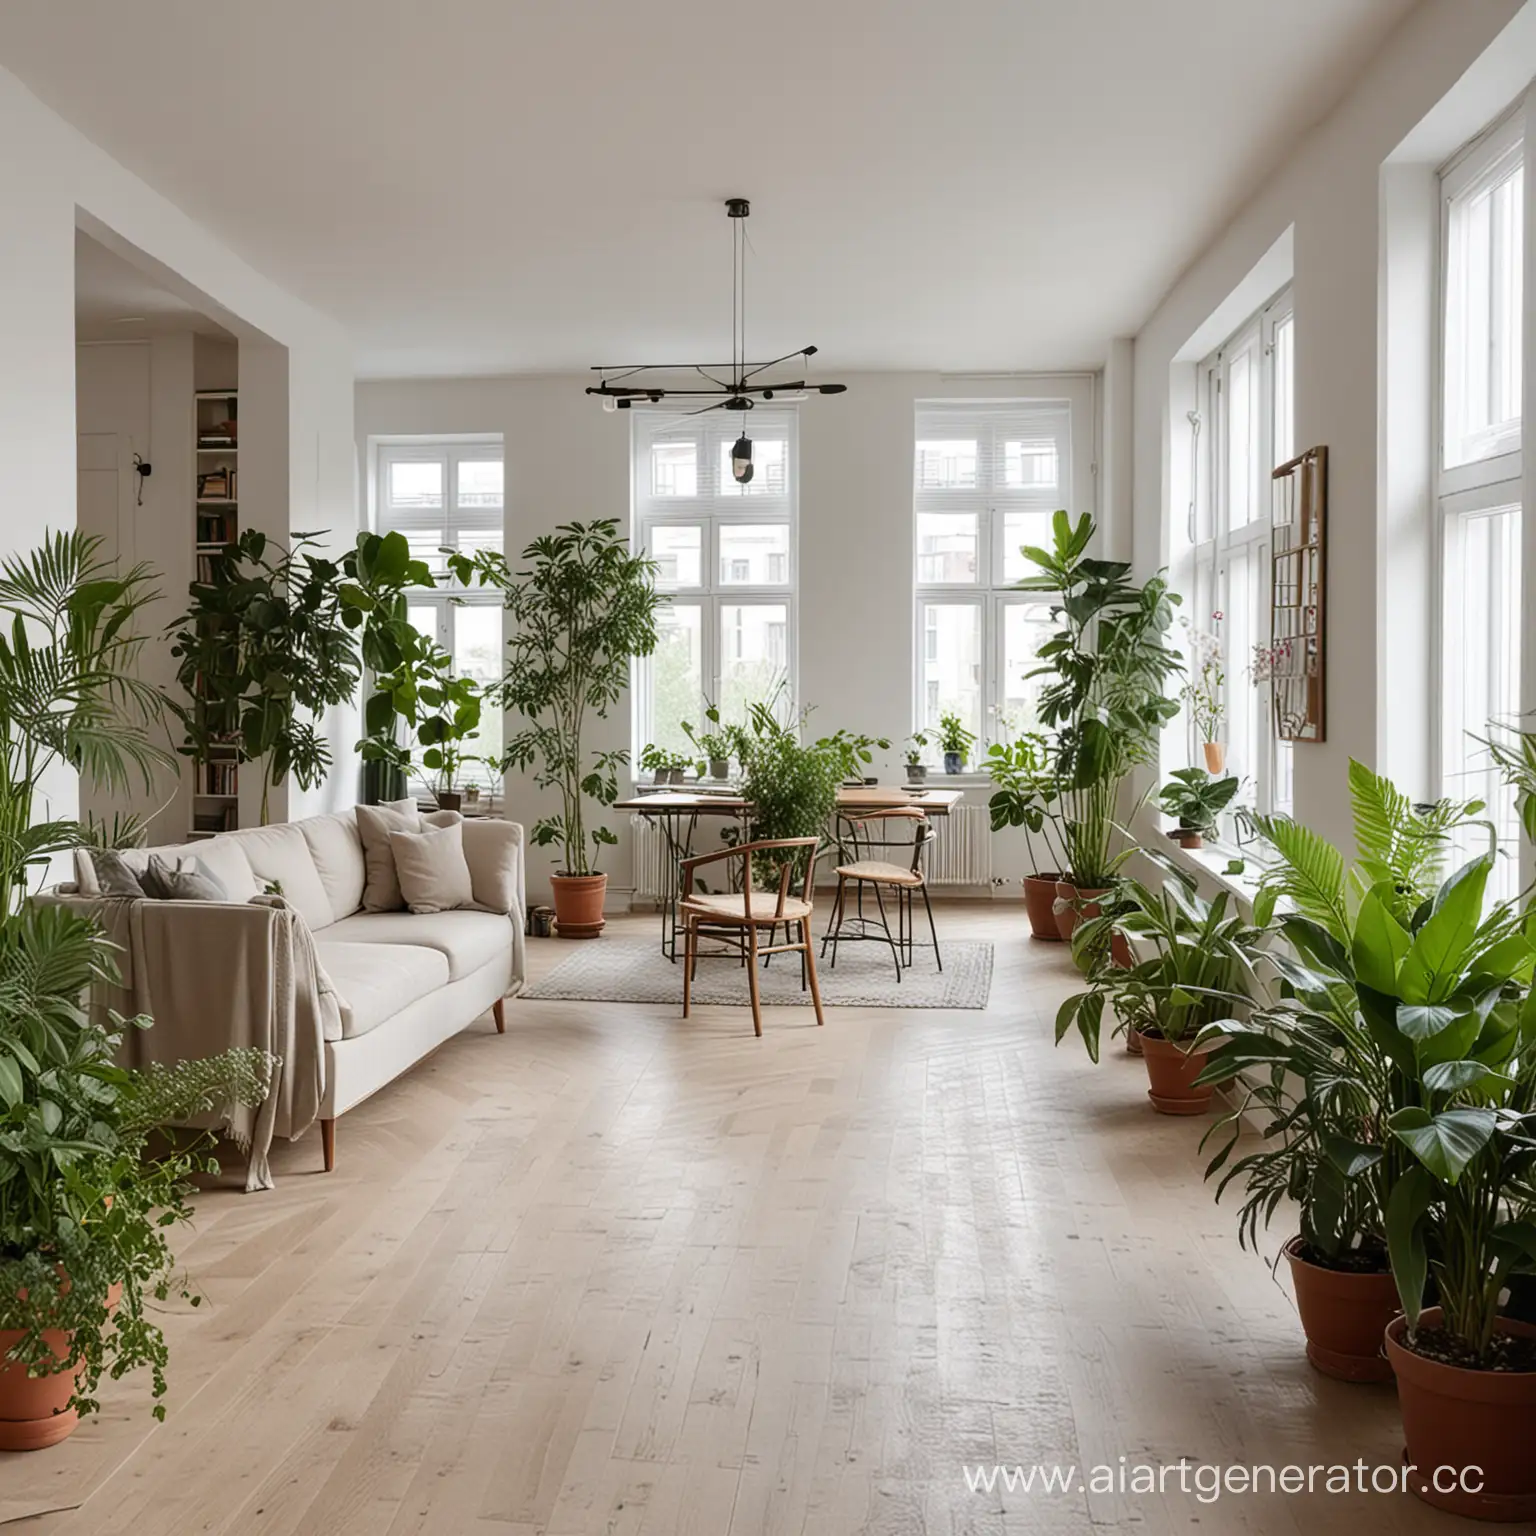 Minimalistic-Style-Architects-Apartment-with-Abundant-Plants-and-Flowers